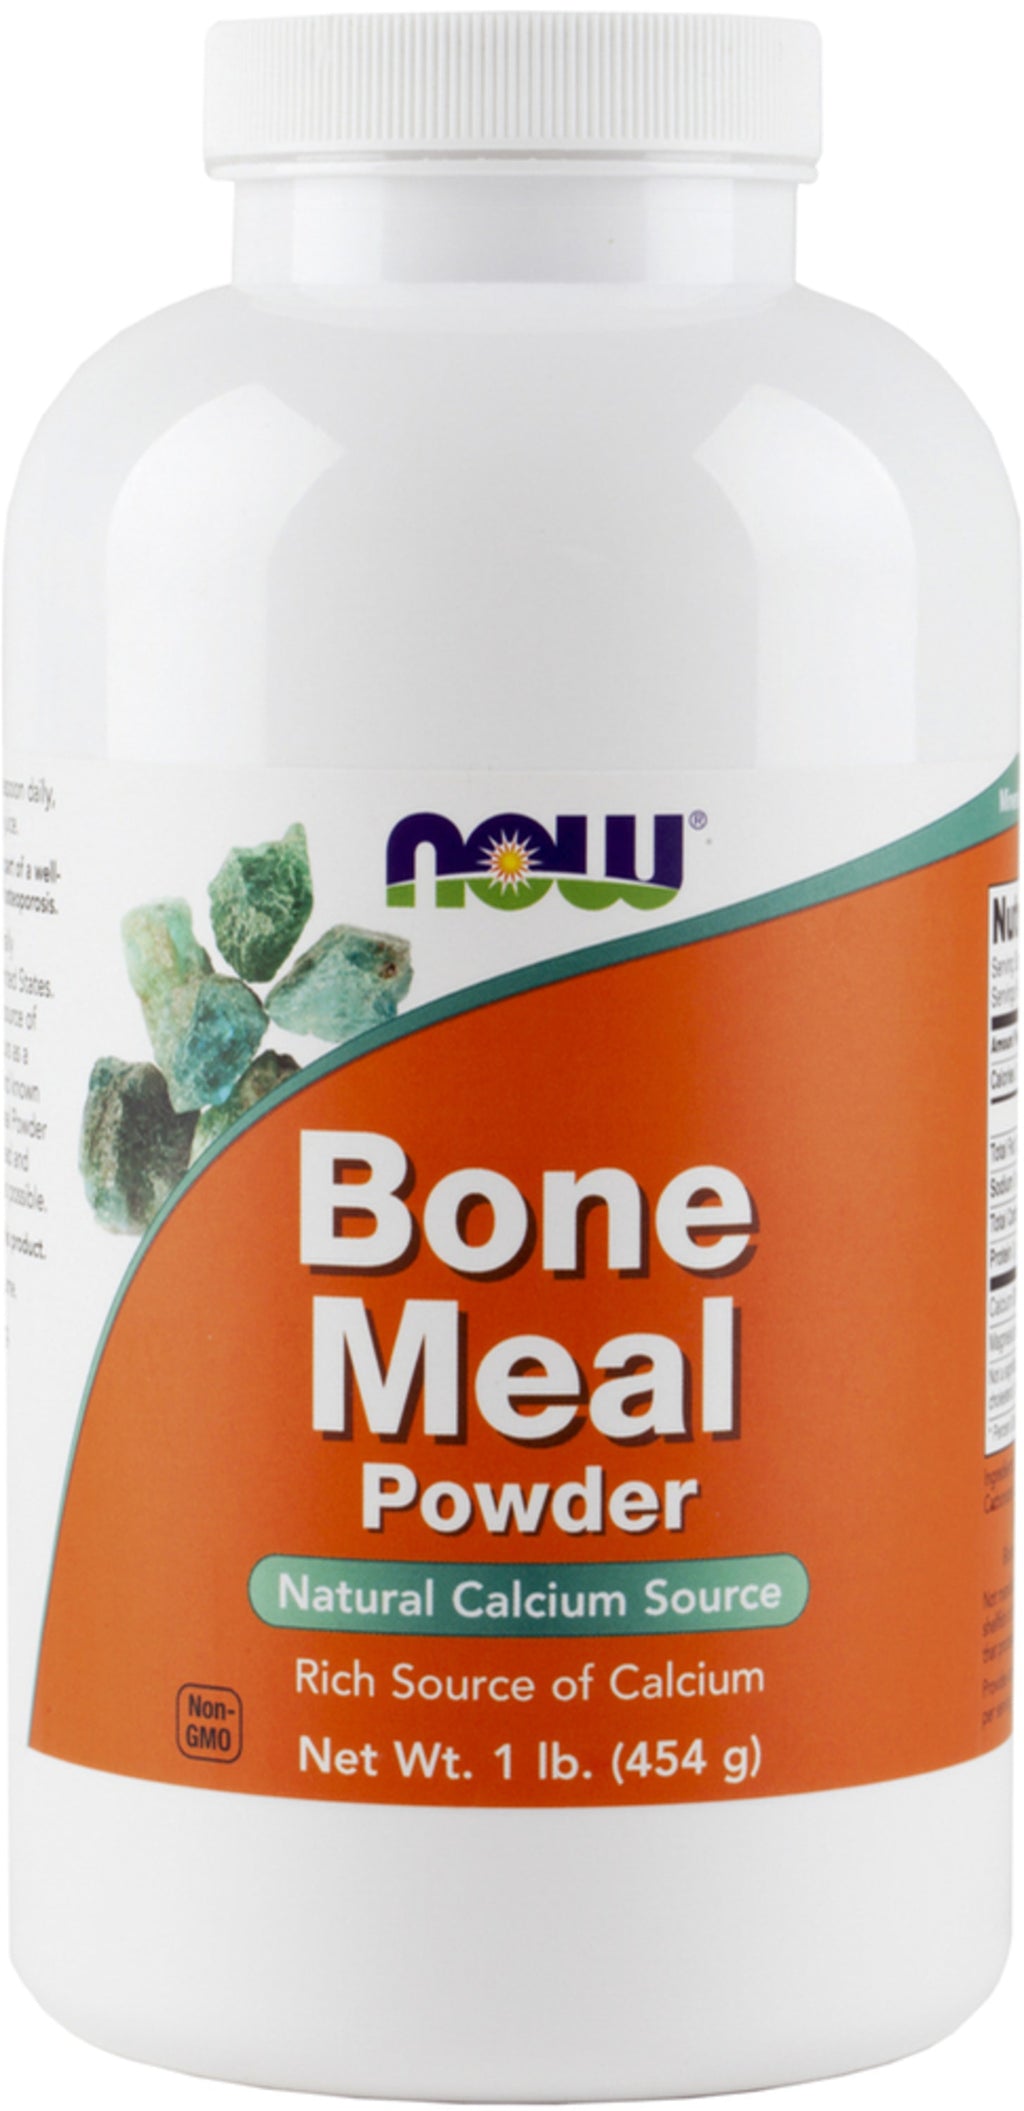 Beef Bone Broth Powder, 1.2 lbs (544 g) Bottle